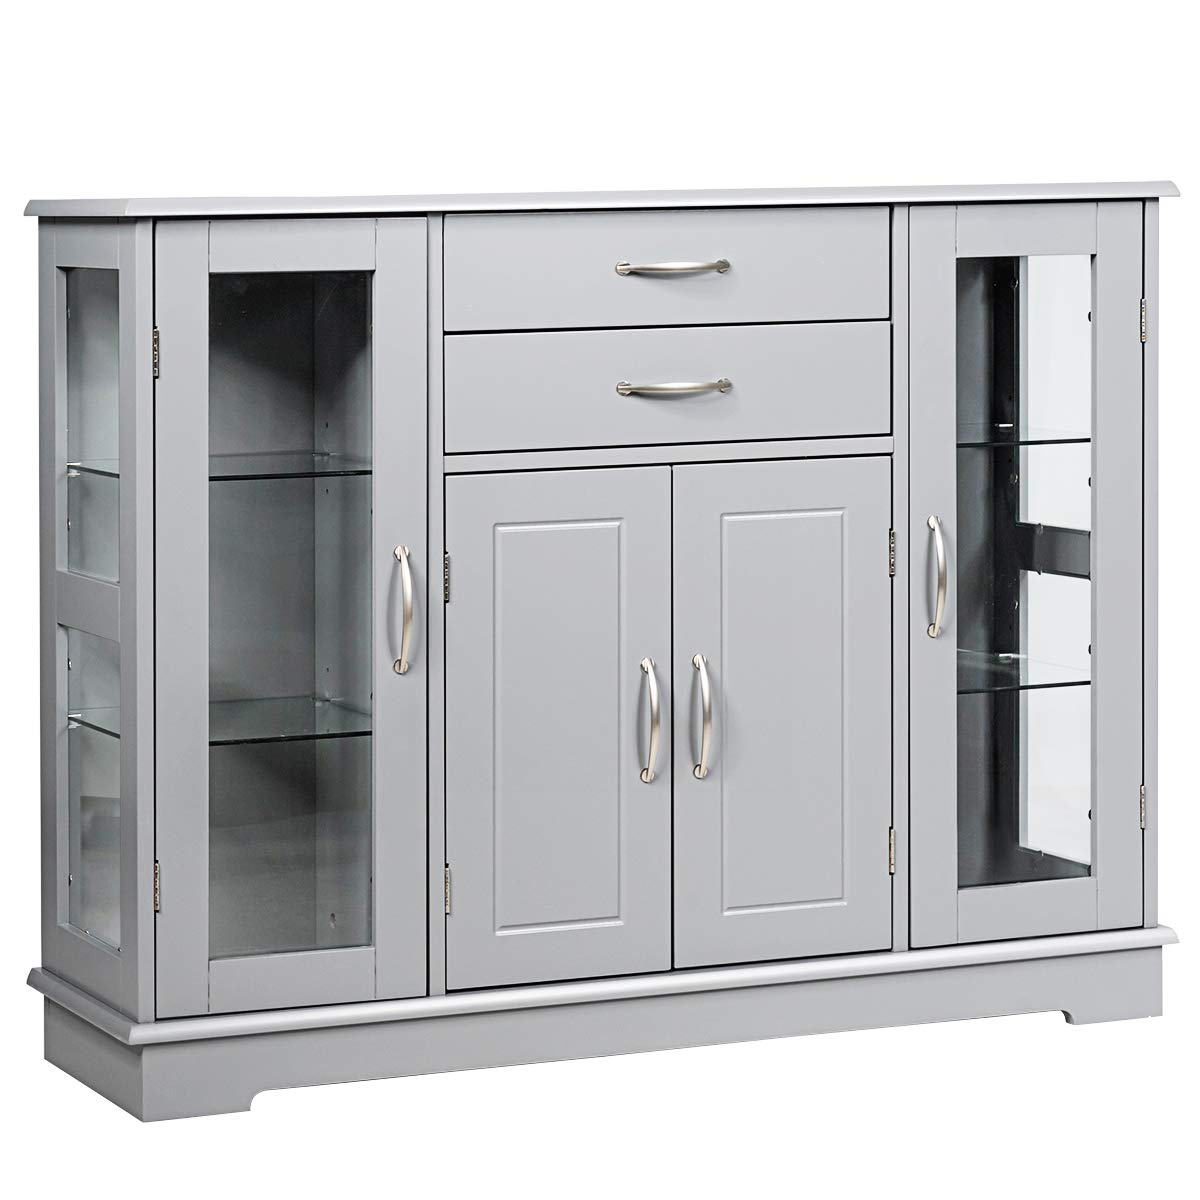 Giantex Sideboard Buffet Server Storage Cabinet W/ 2 Drawers, Grey